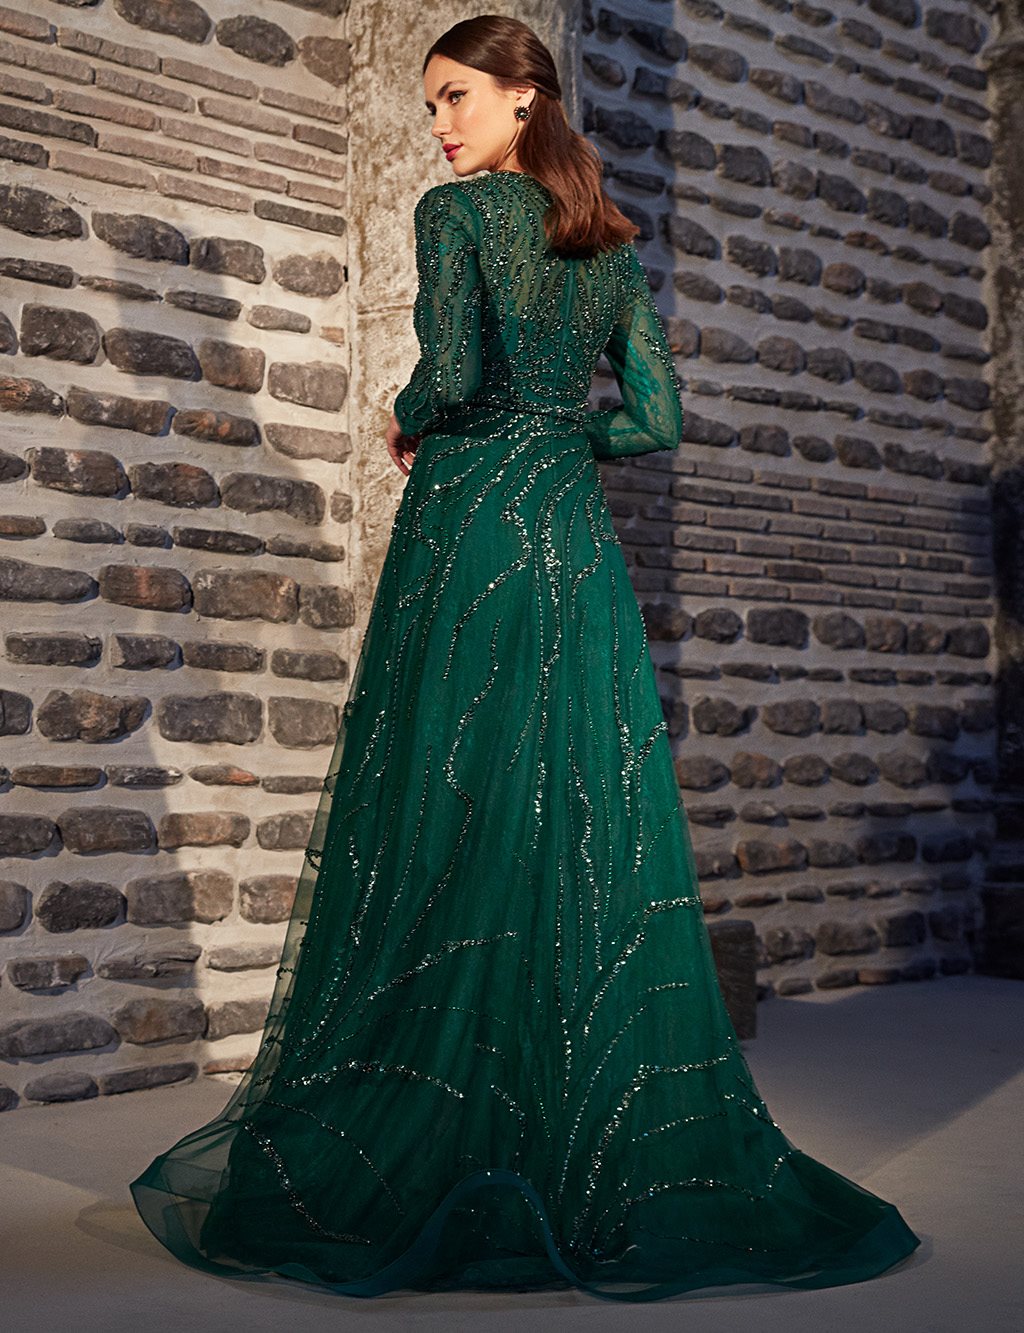  TIARA Sequined Boat Neck Evening Dress Emerald